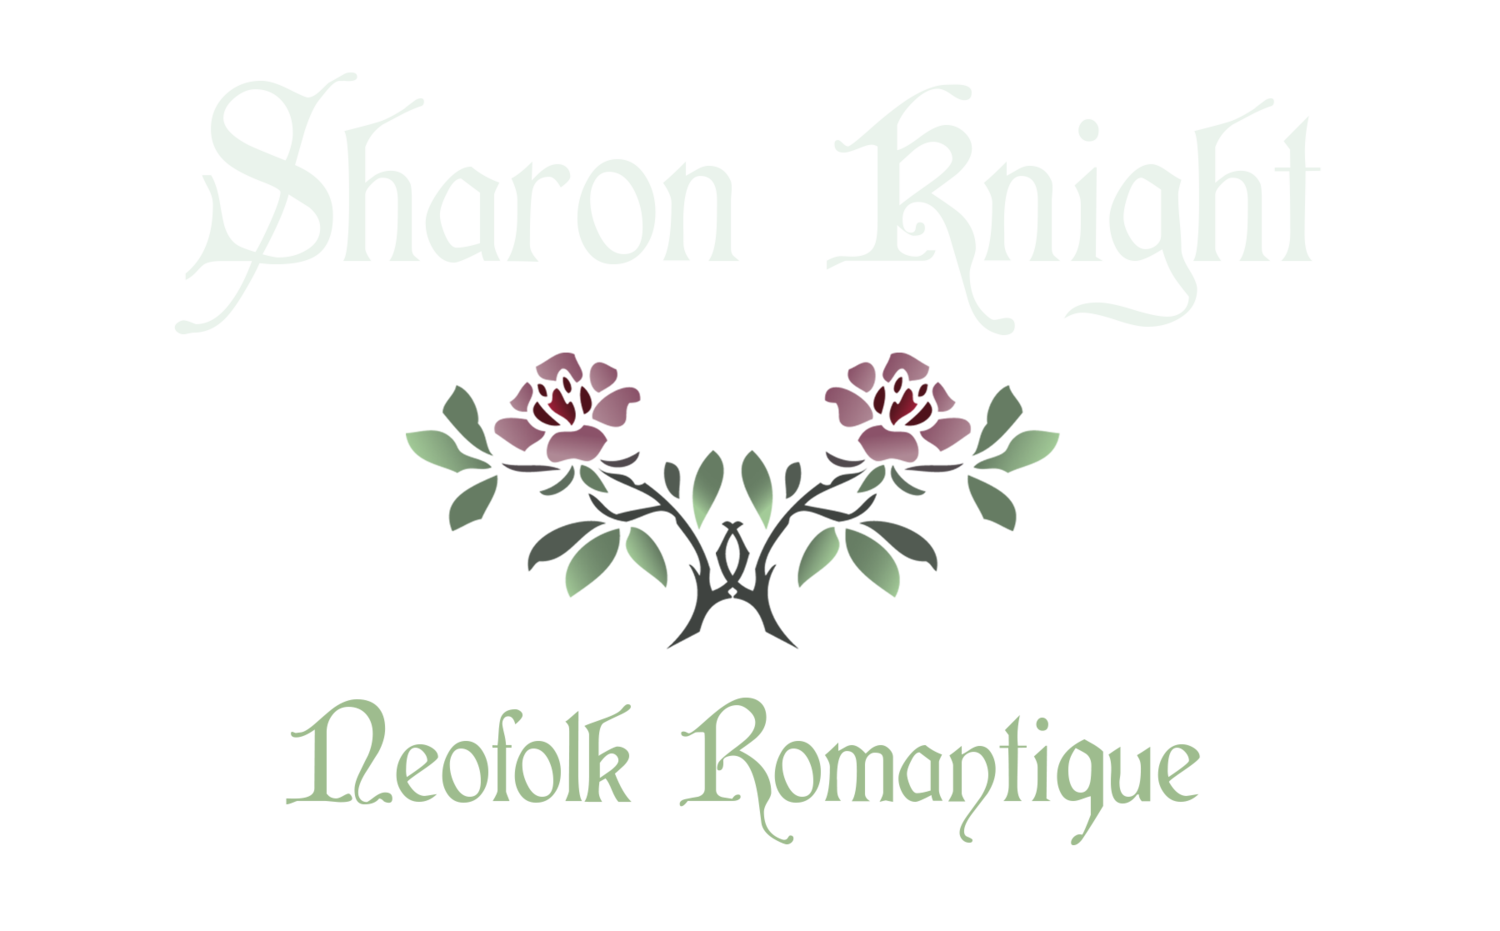 Sharon Knight